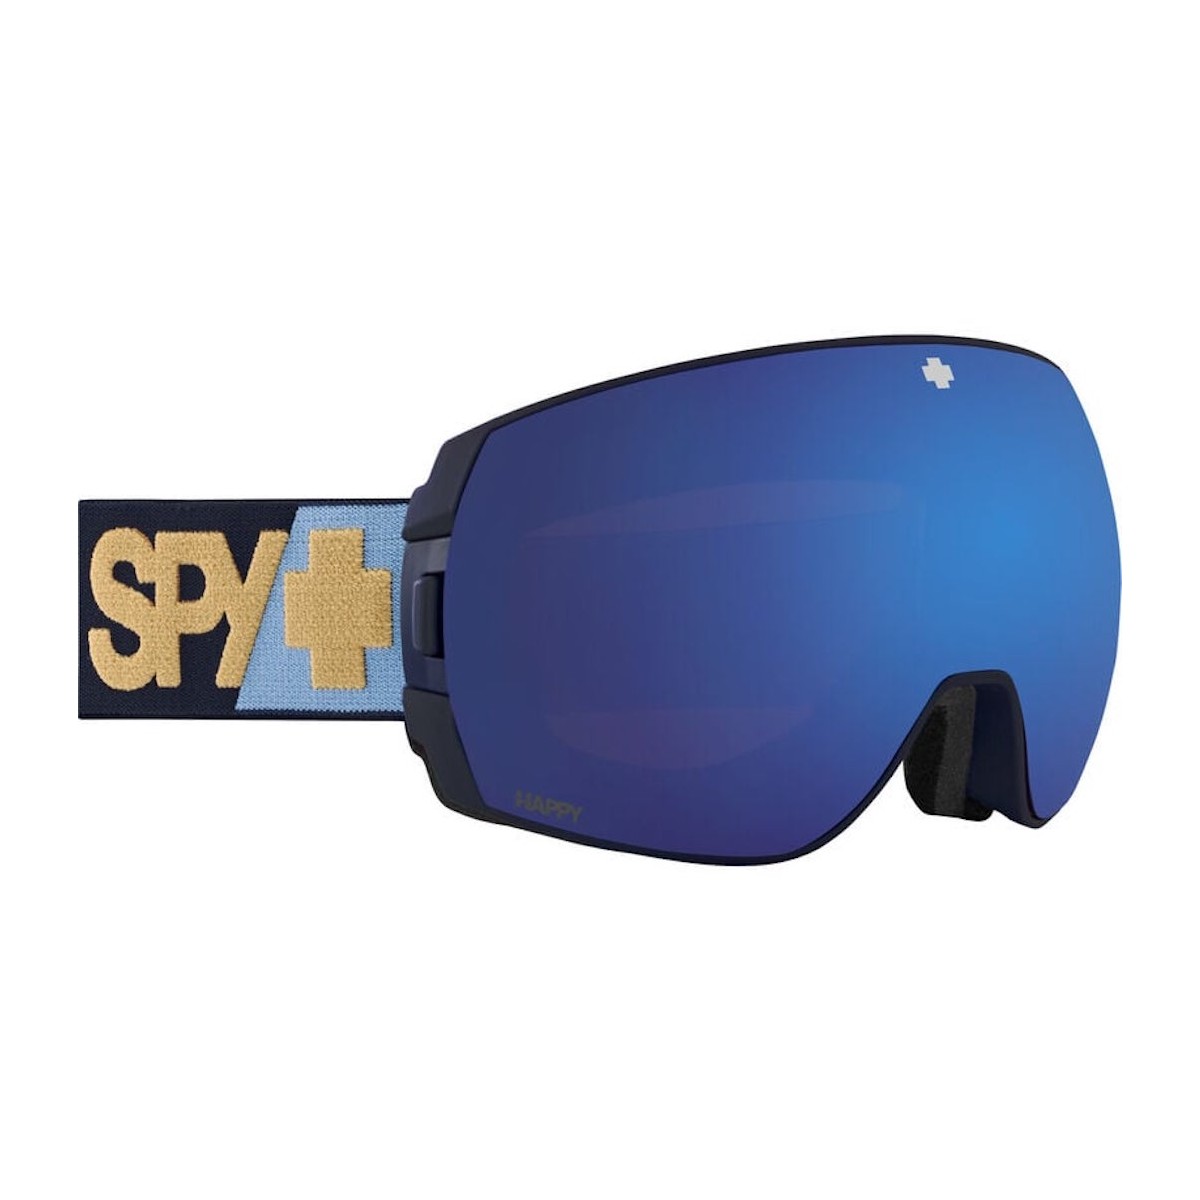 SPY LEGACY SNOW goggles - dark blue